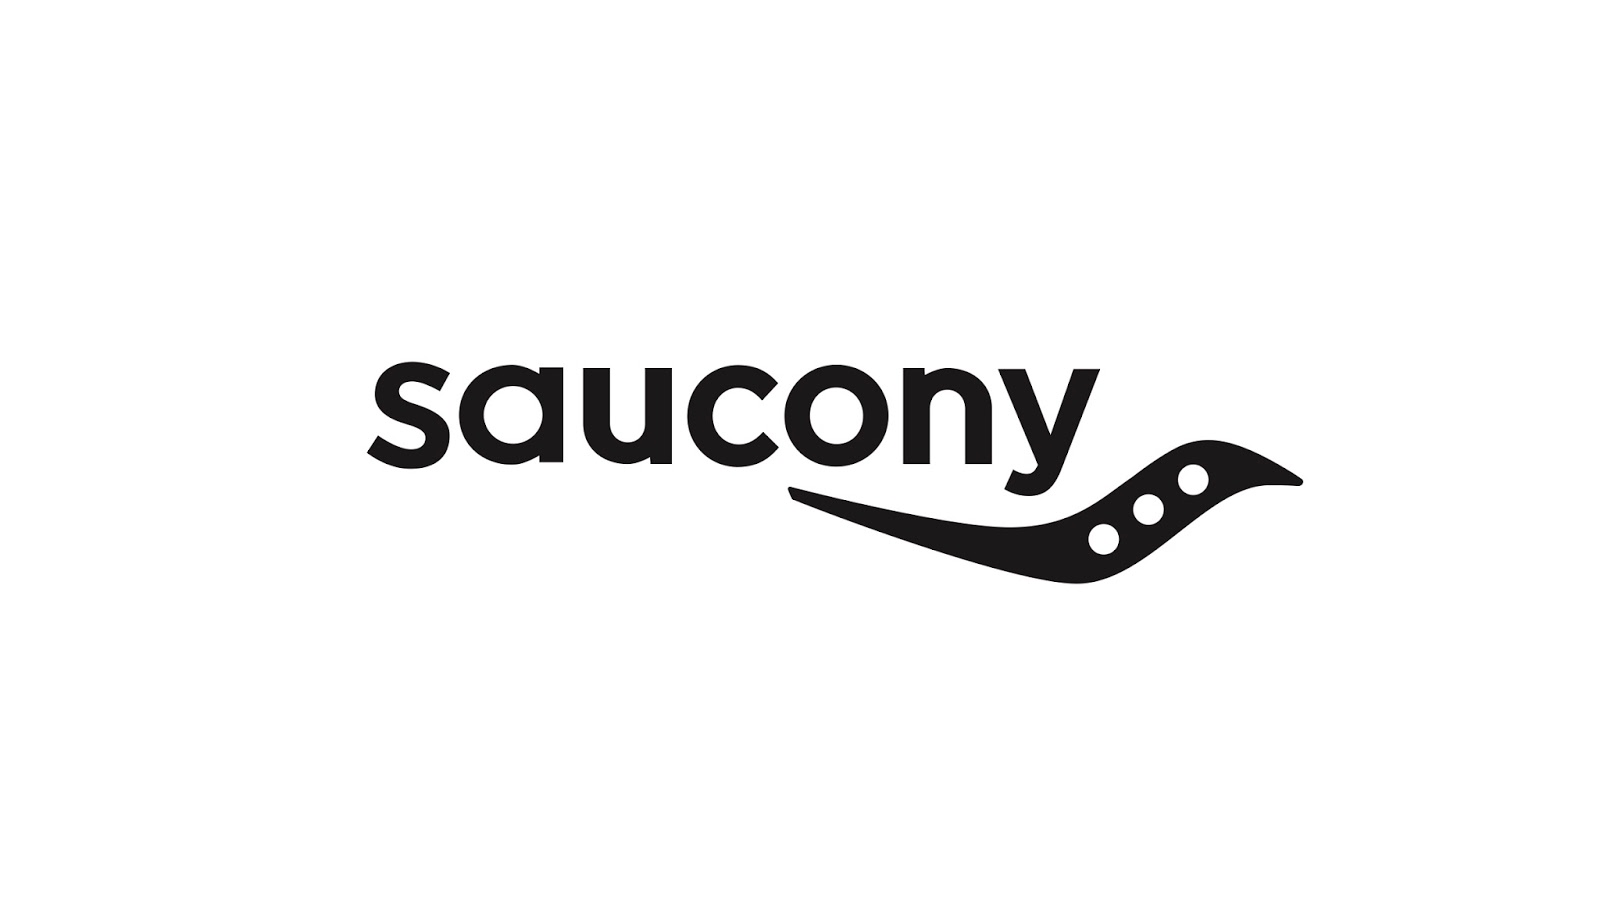 Saucony Src Sale Up To Discounts